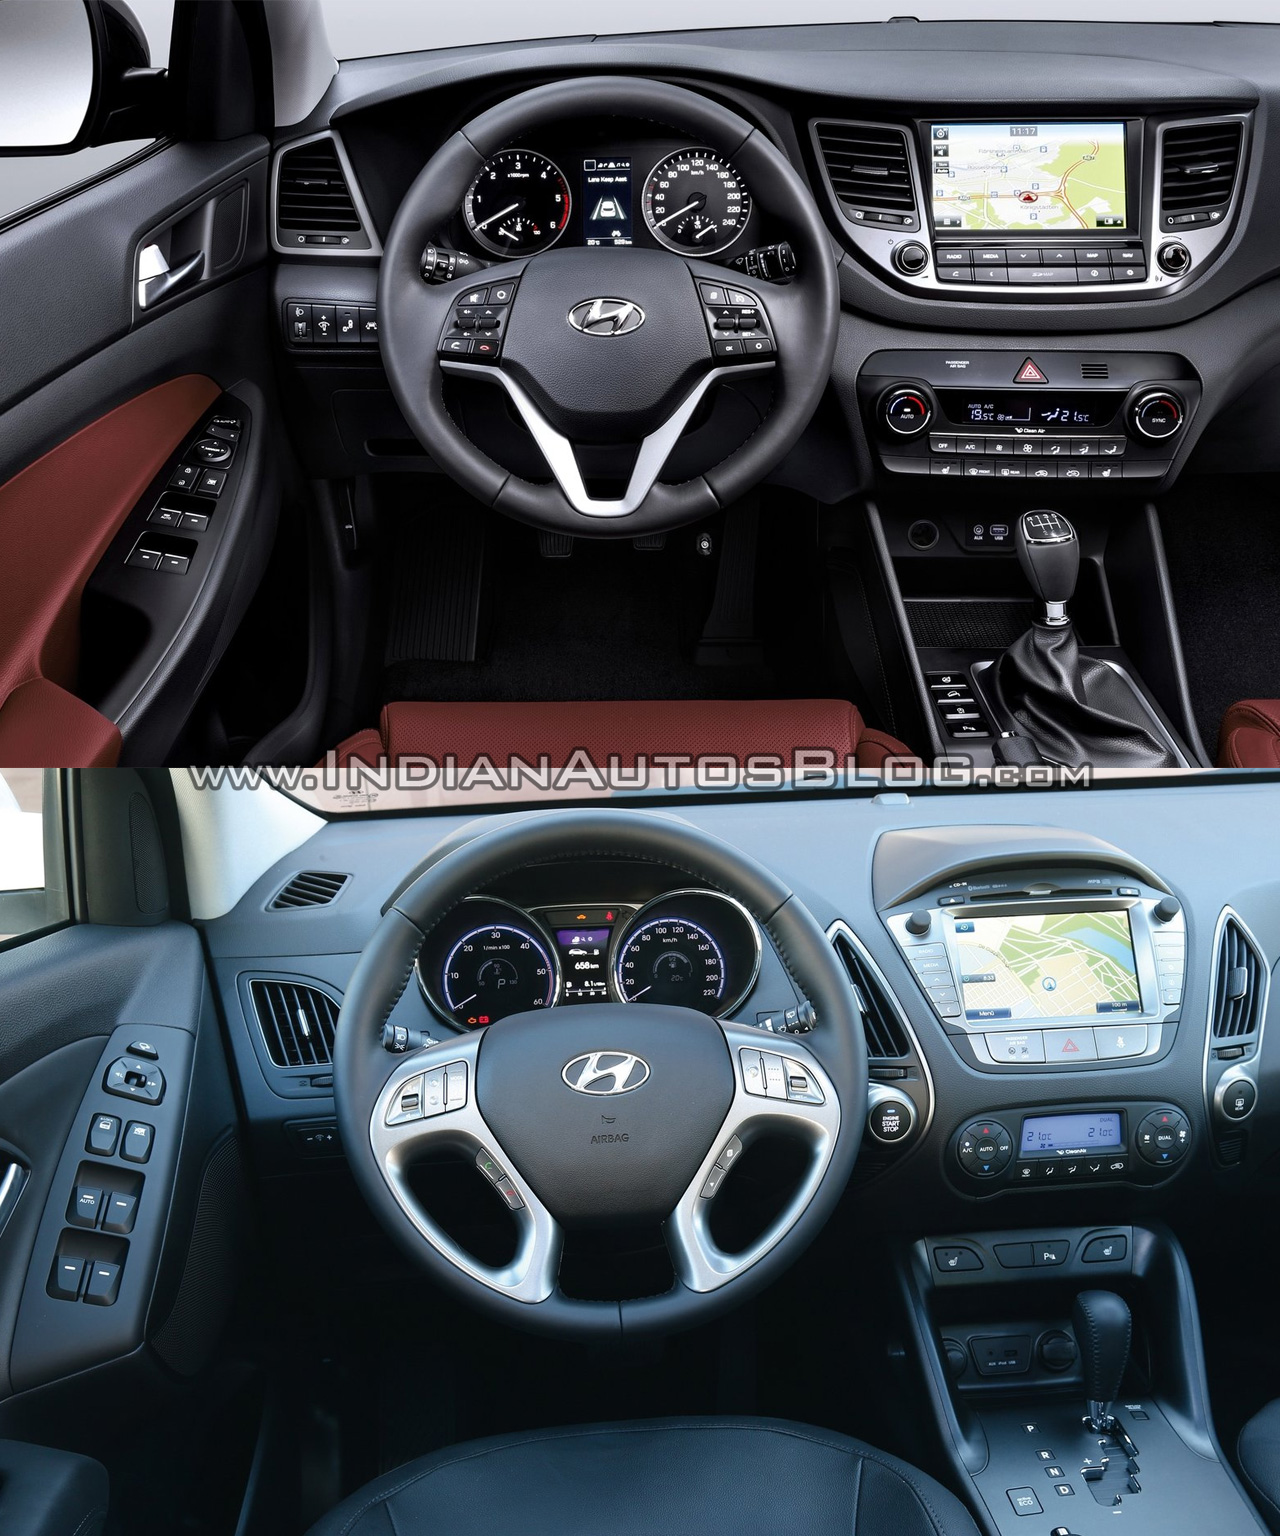 Hyundai ix35 S (2014) vs Hyundai Tucson GLS (2014): What is the difference?